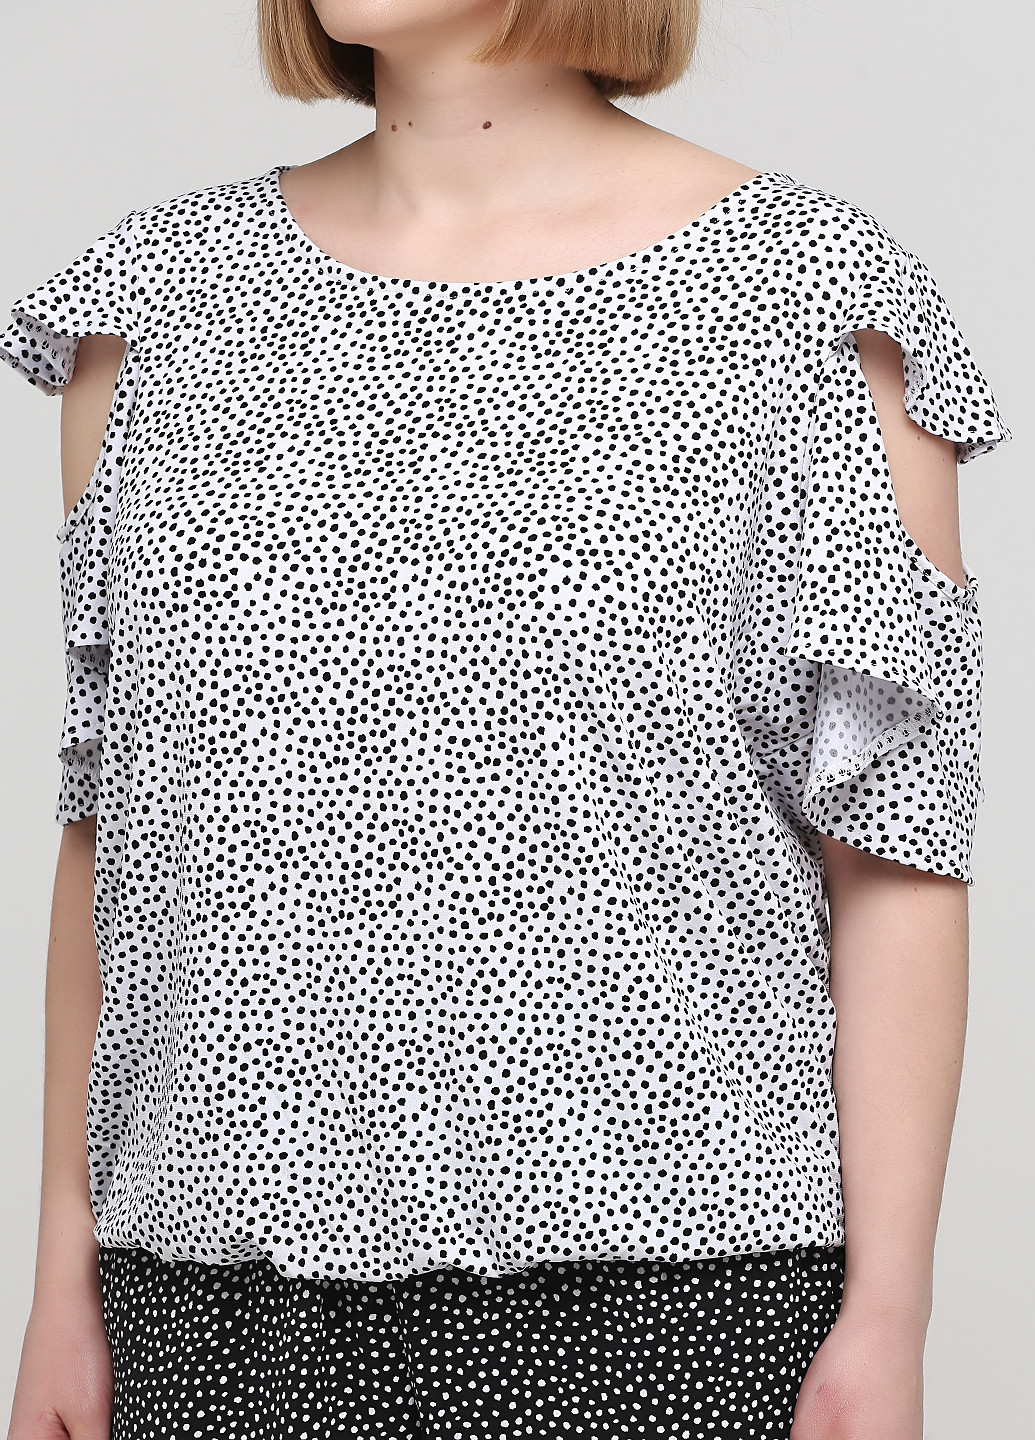 Черно-белая летняя блуза Avon